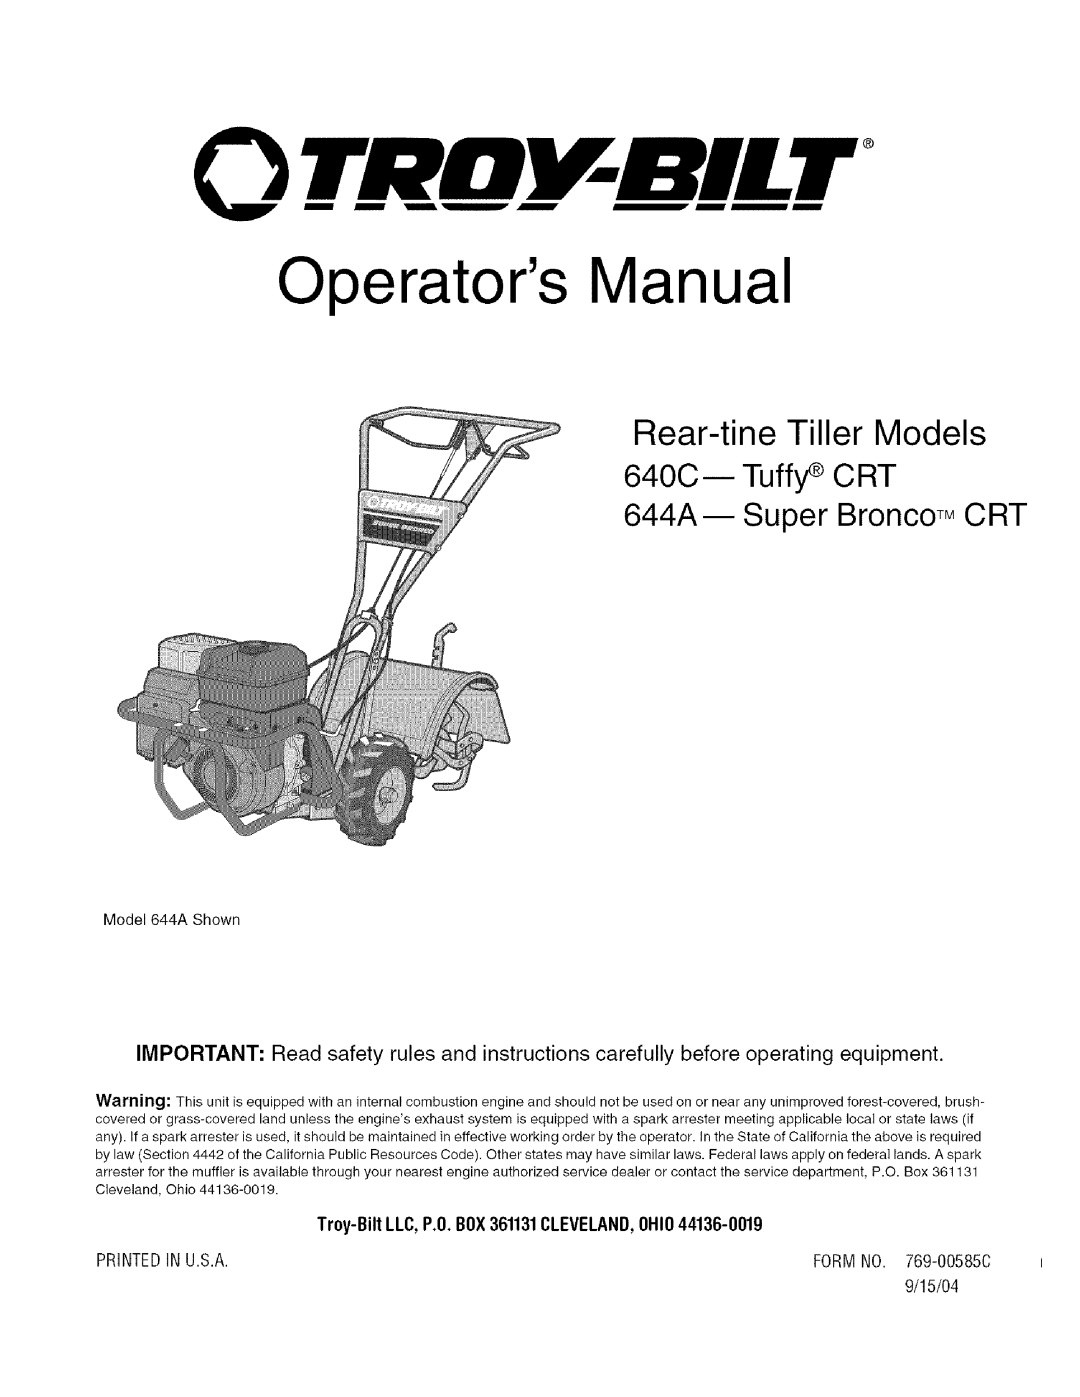 Troy-Bilt manual Operators Manual, Rear-tineTiller Models, 640C--Tuffy CRT 644A m Super Bronco TM CRT 